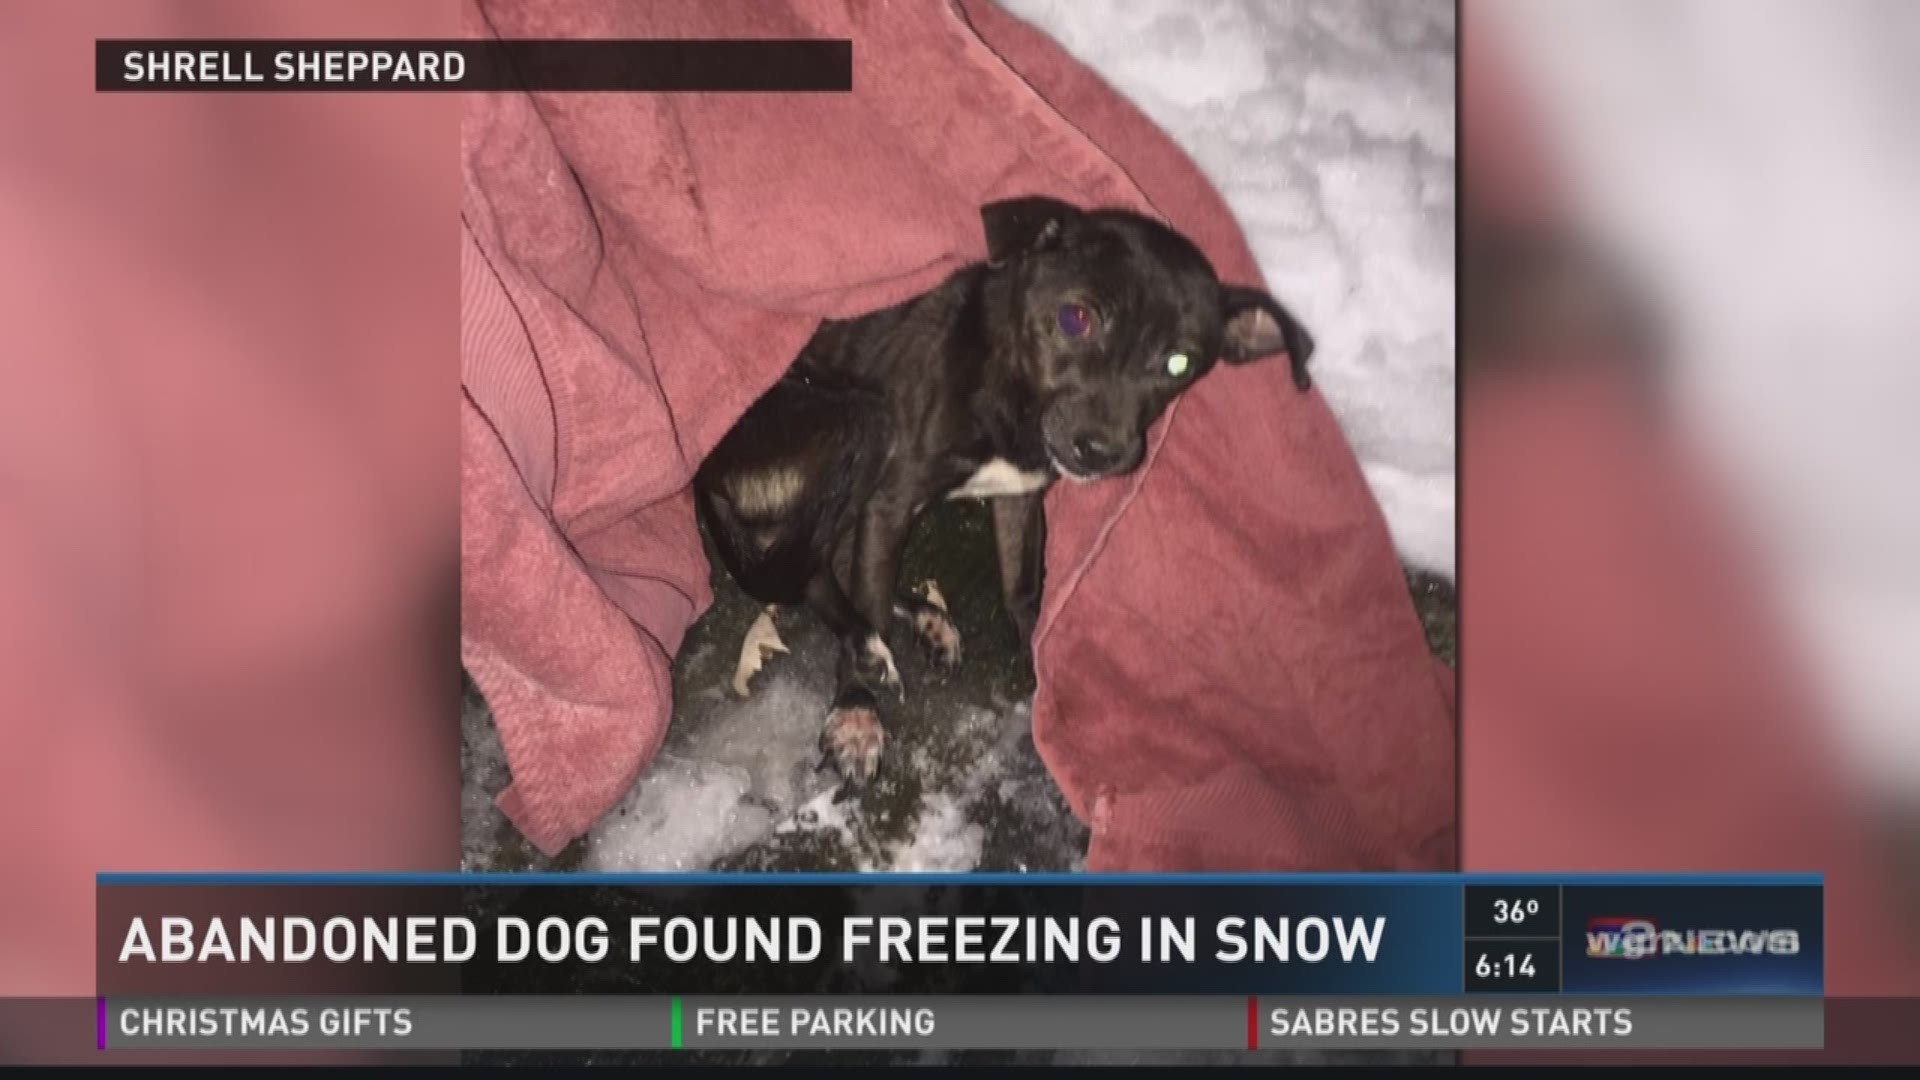 ABANDONED DOG FOUND FREEZING IN SNOW